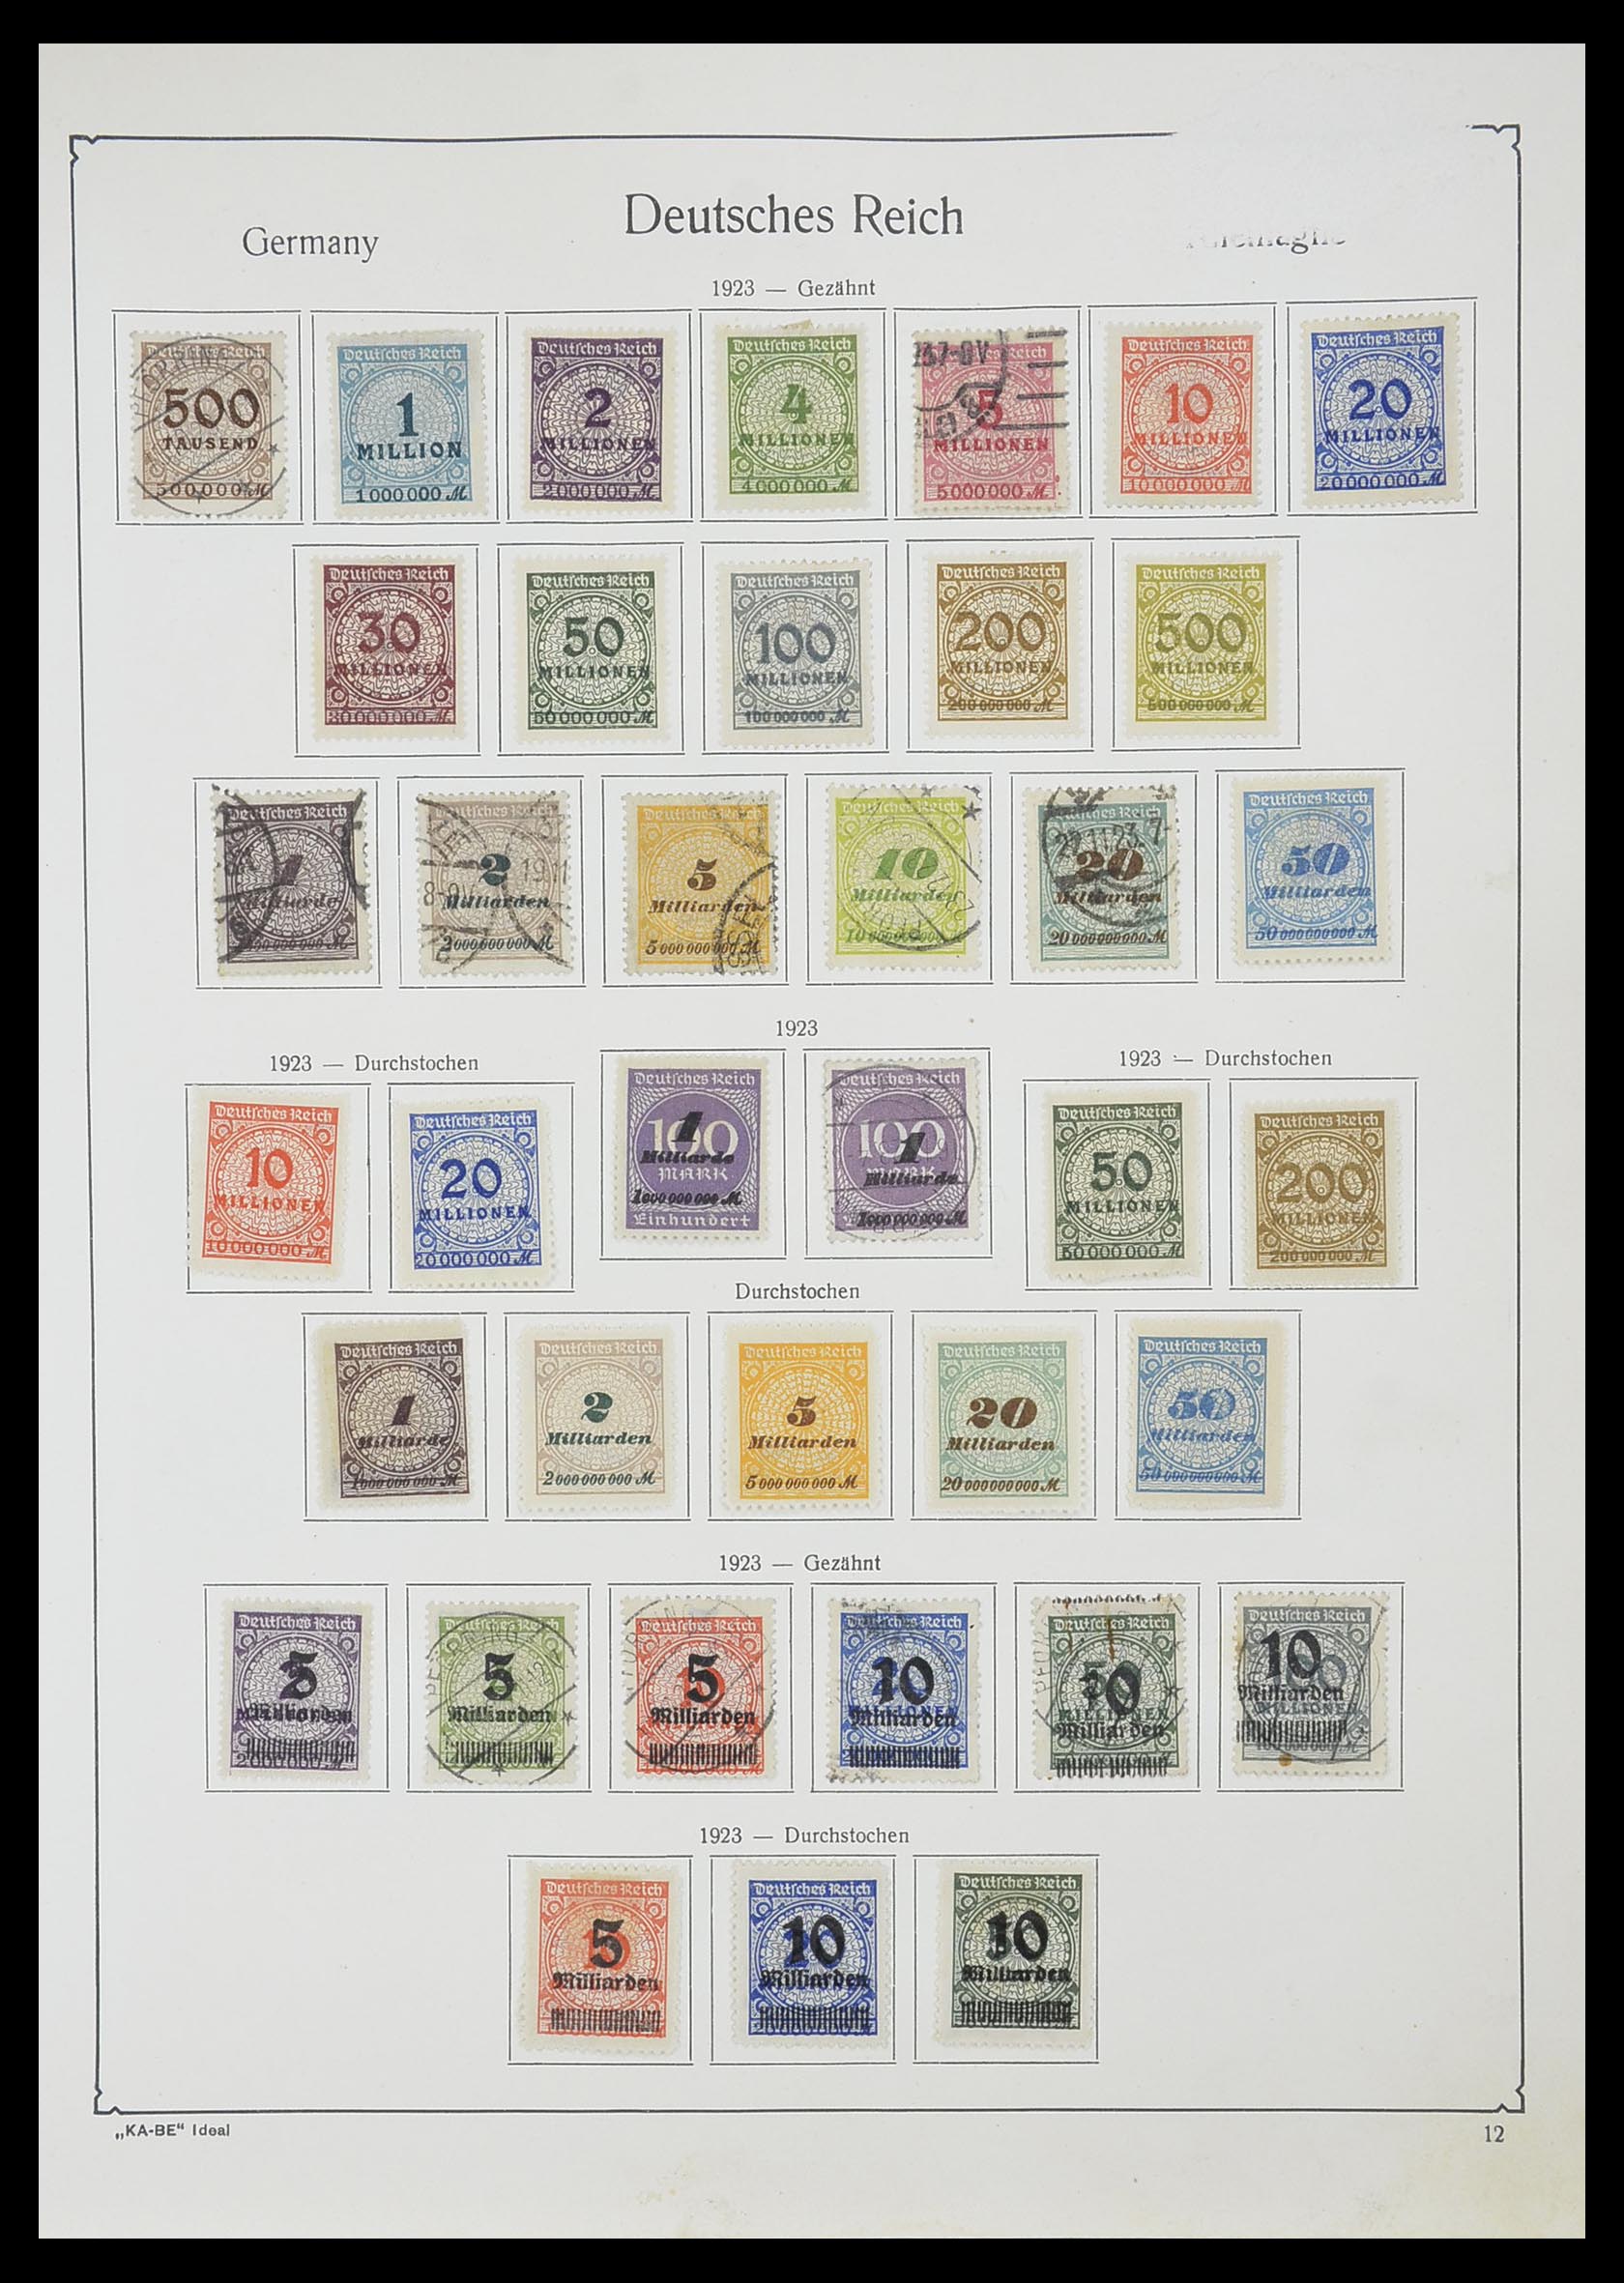 33359 017 - Stamp collection 33359 German Reich 1872-1945.